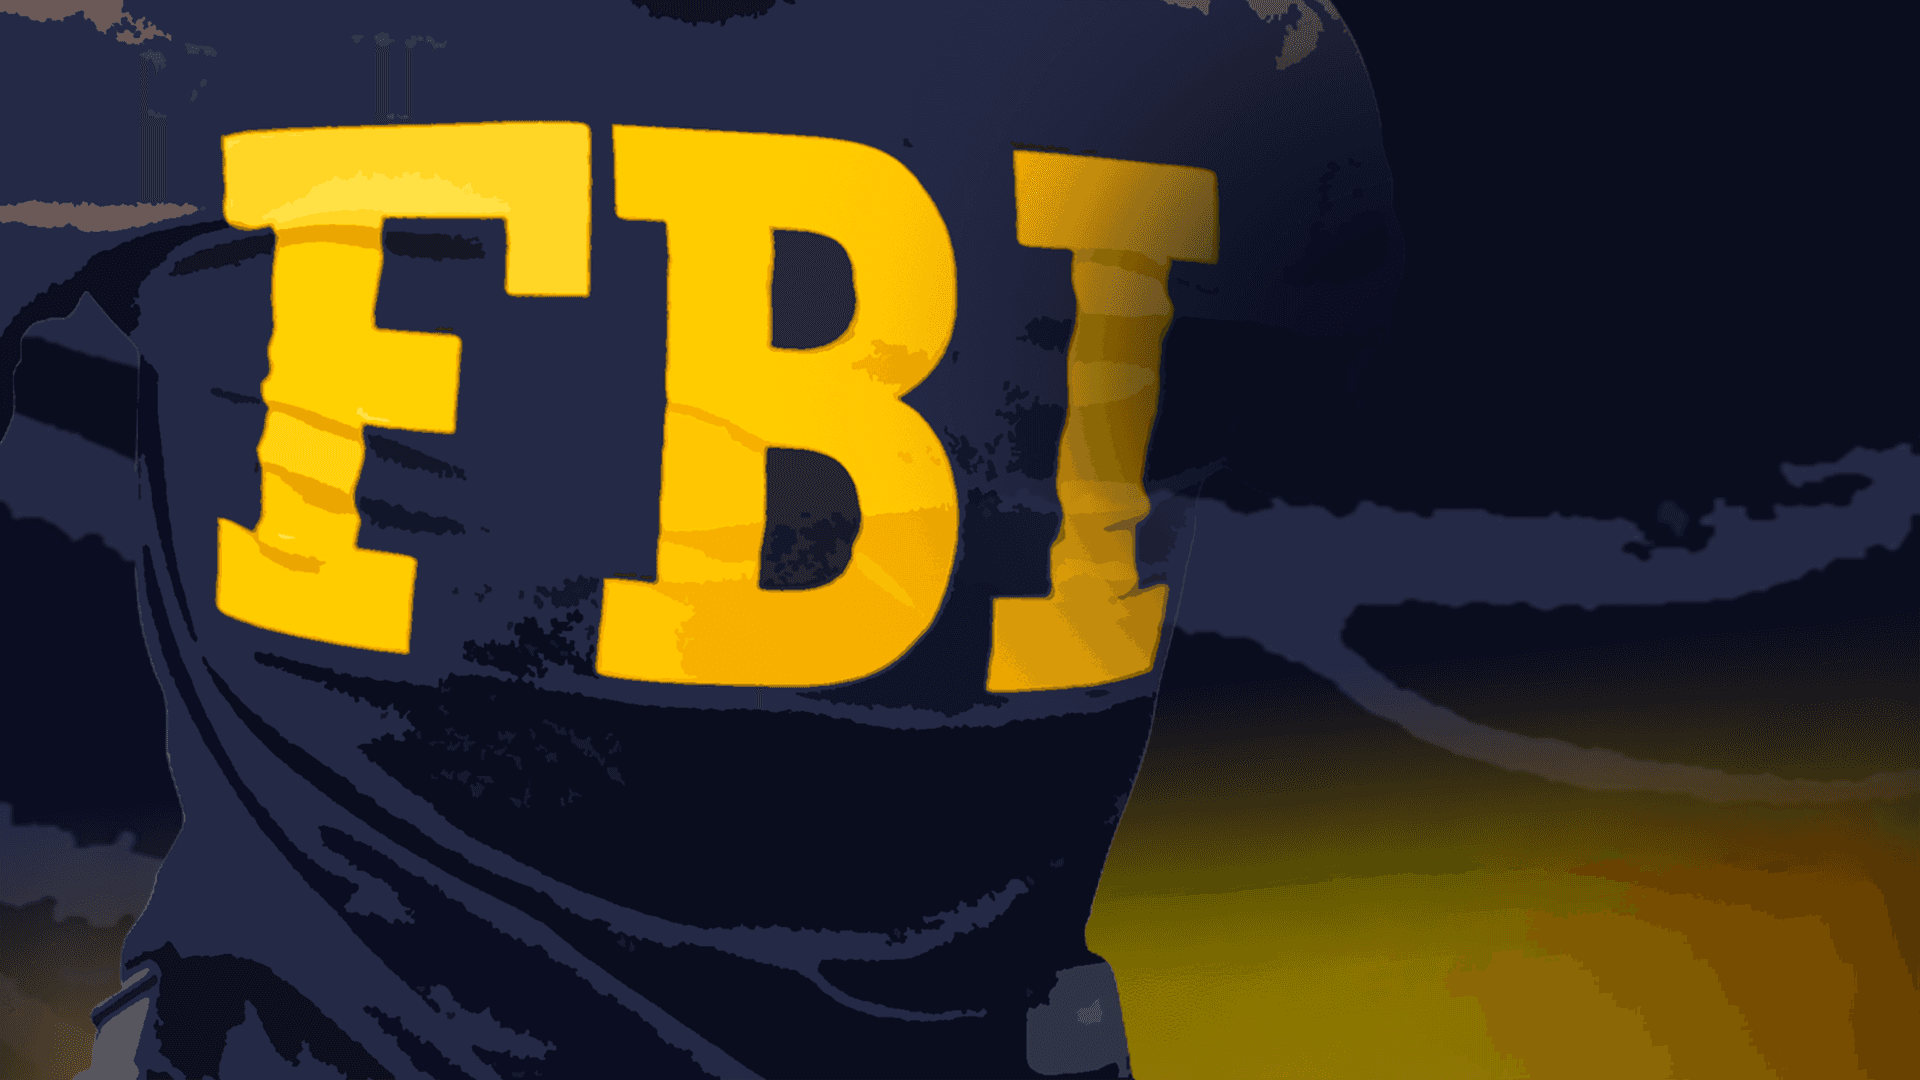 FBI Emblem Background